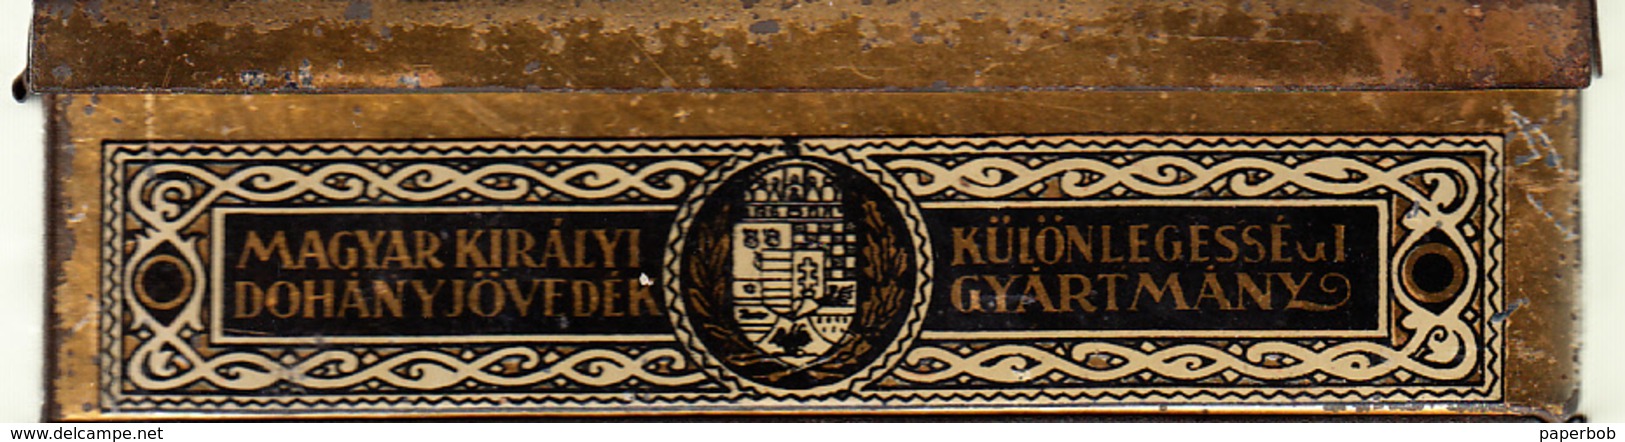 TOBACCO METAL BOX,HUNGARY 1920th ,13.5cm X 11cm X 3cm - Boites à Tabac Vides